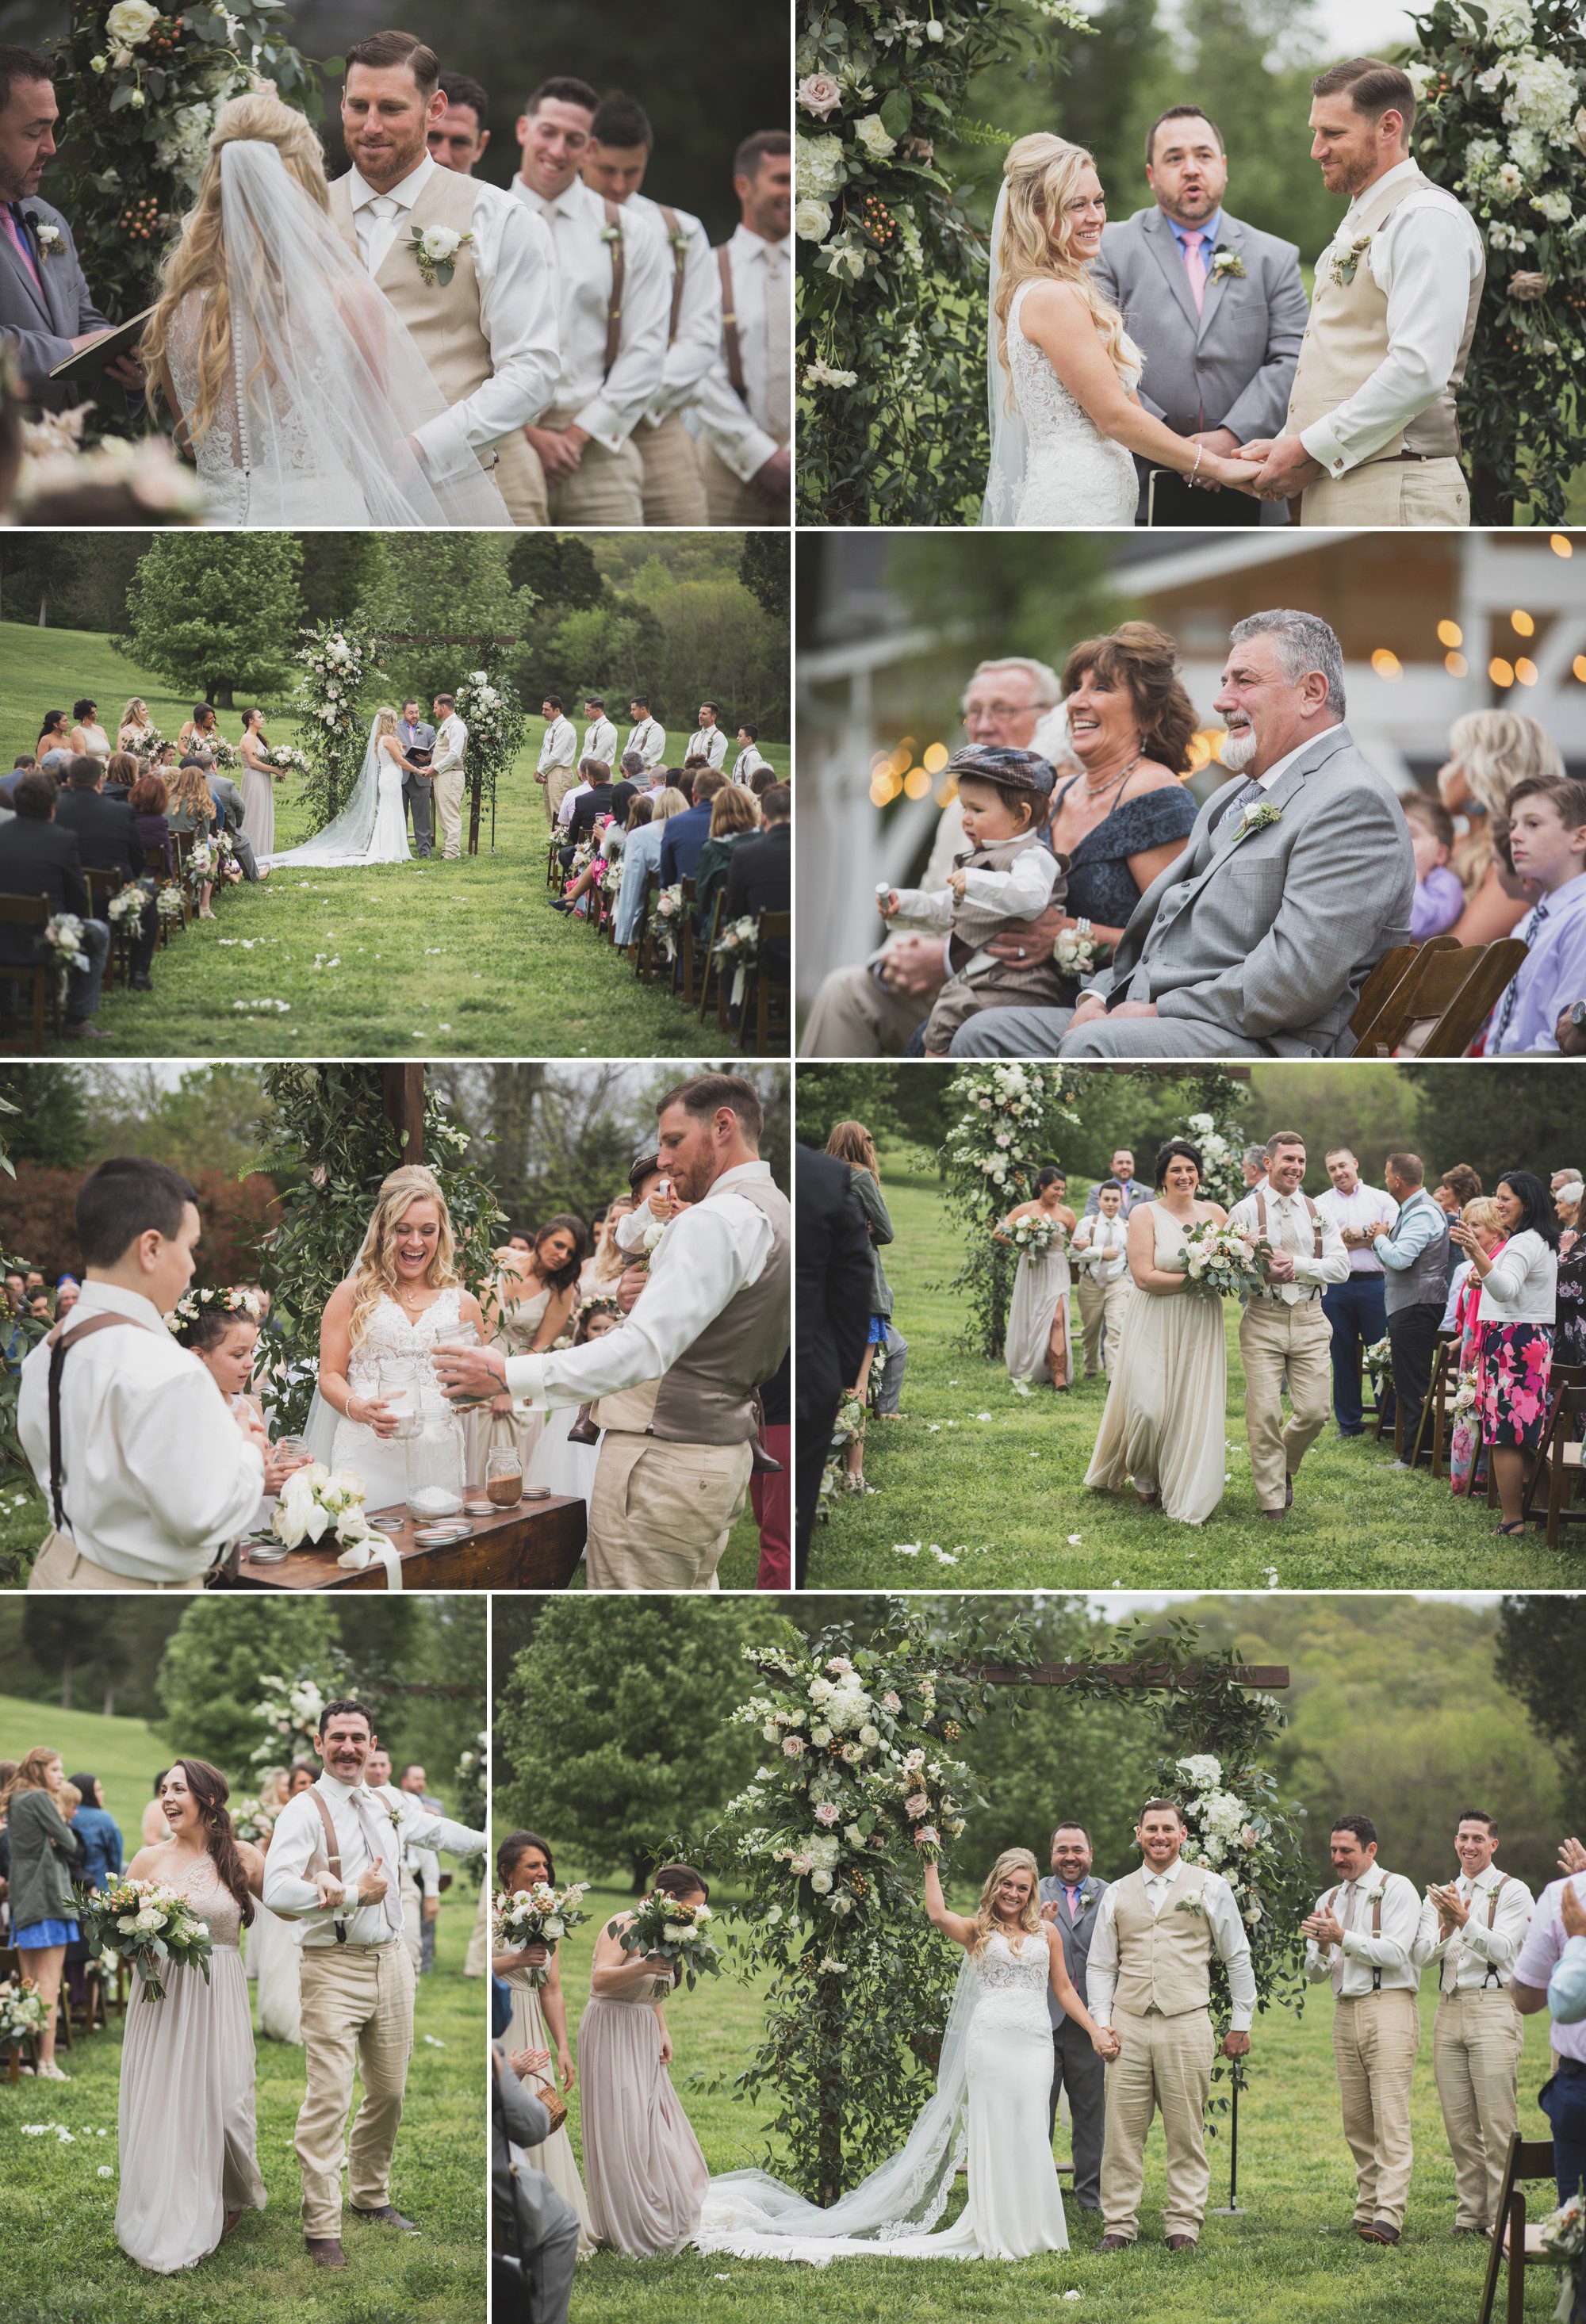  the wedding ceremony at Cedarwood weddings in Nashville, TN. April spring wedding, photos by Krista Lee Photography.